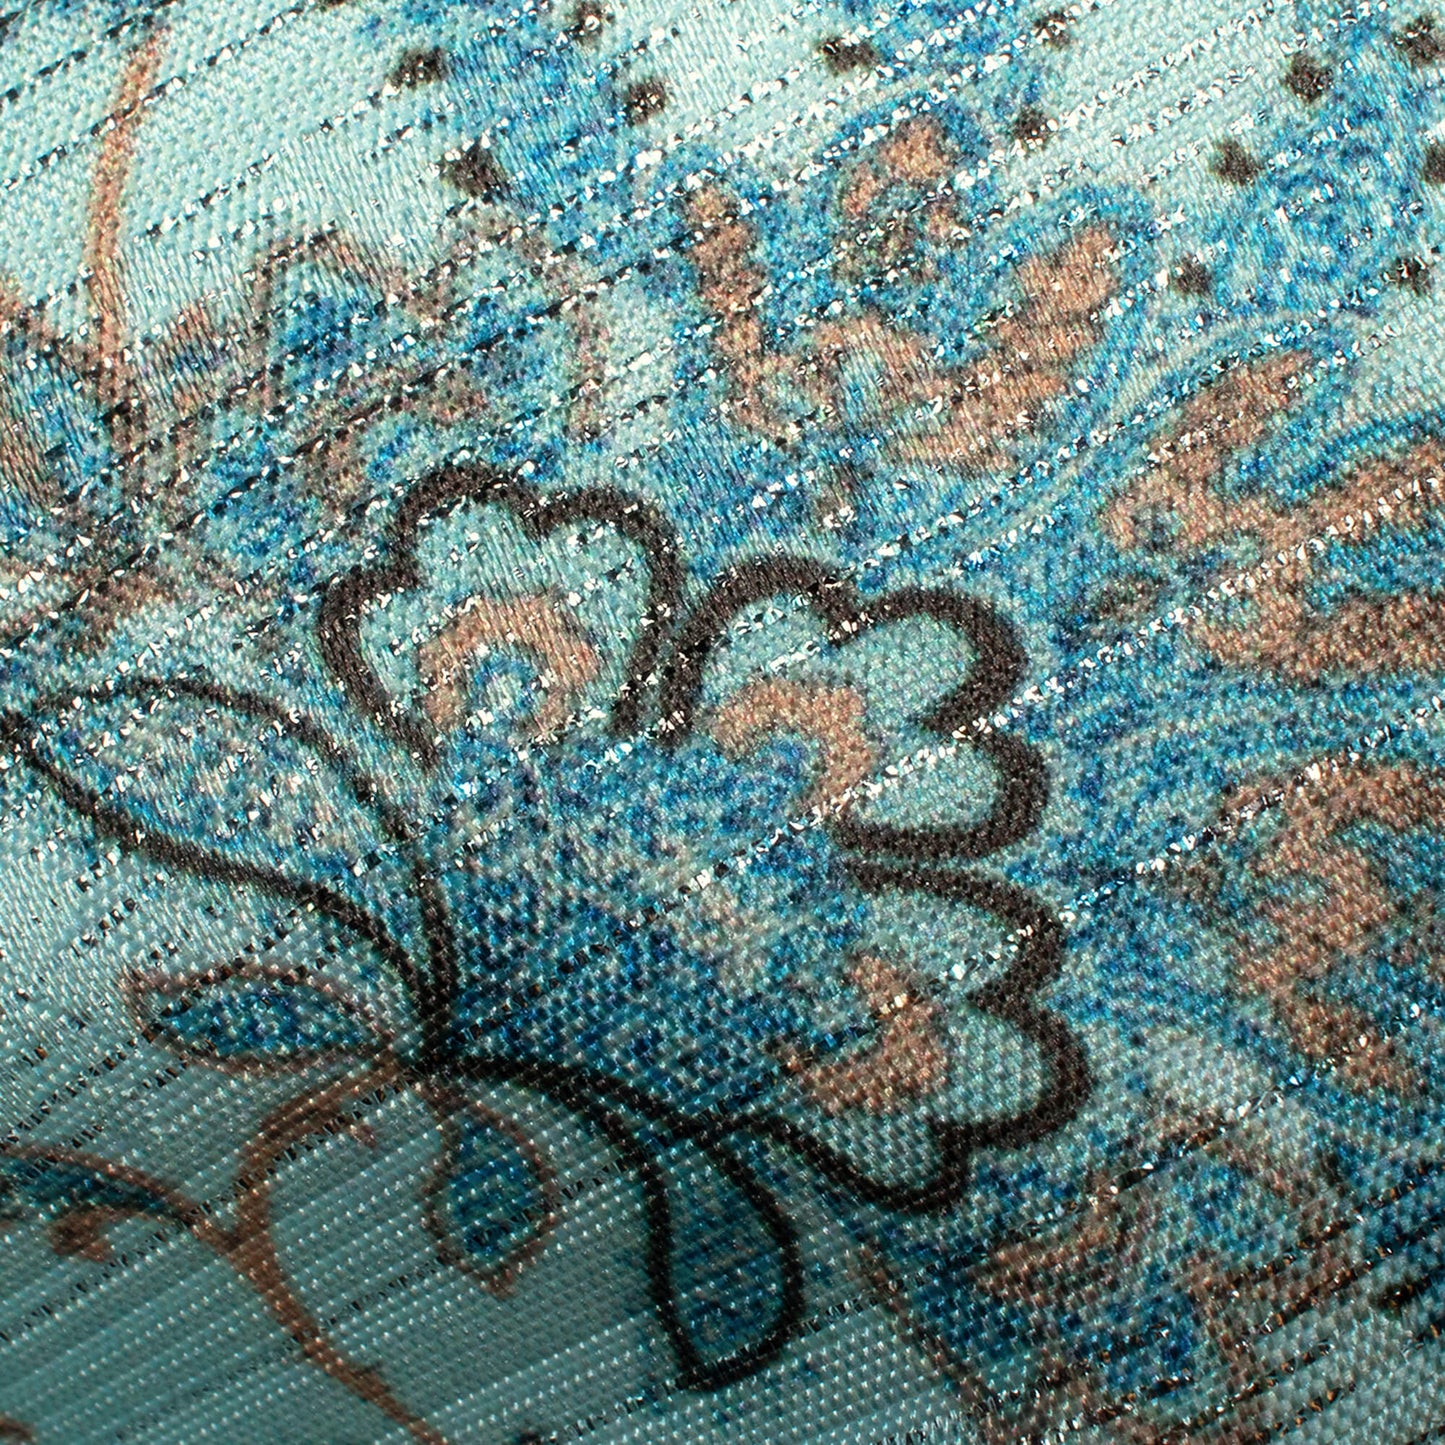 Maya Blue Floral Pattern Digital Print Silver Lurex Jacquard Fabric (Width 54 Inches)